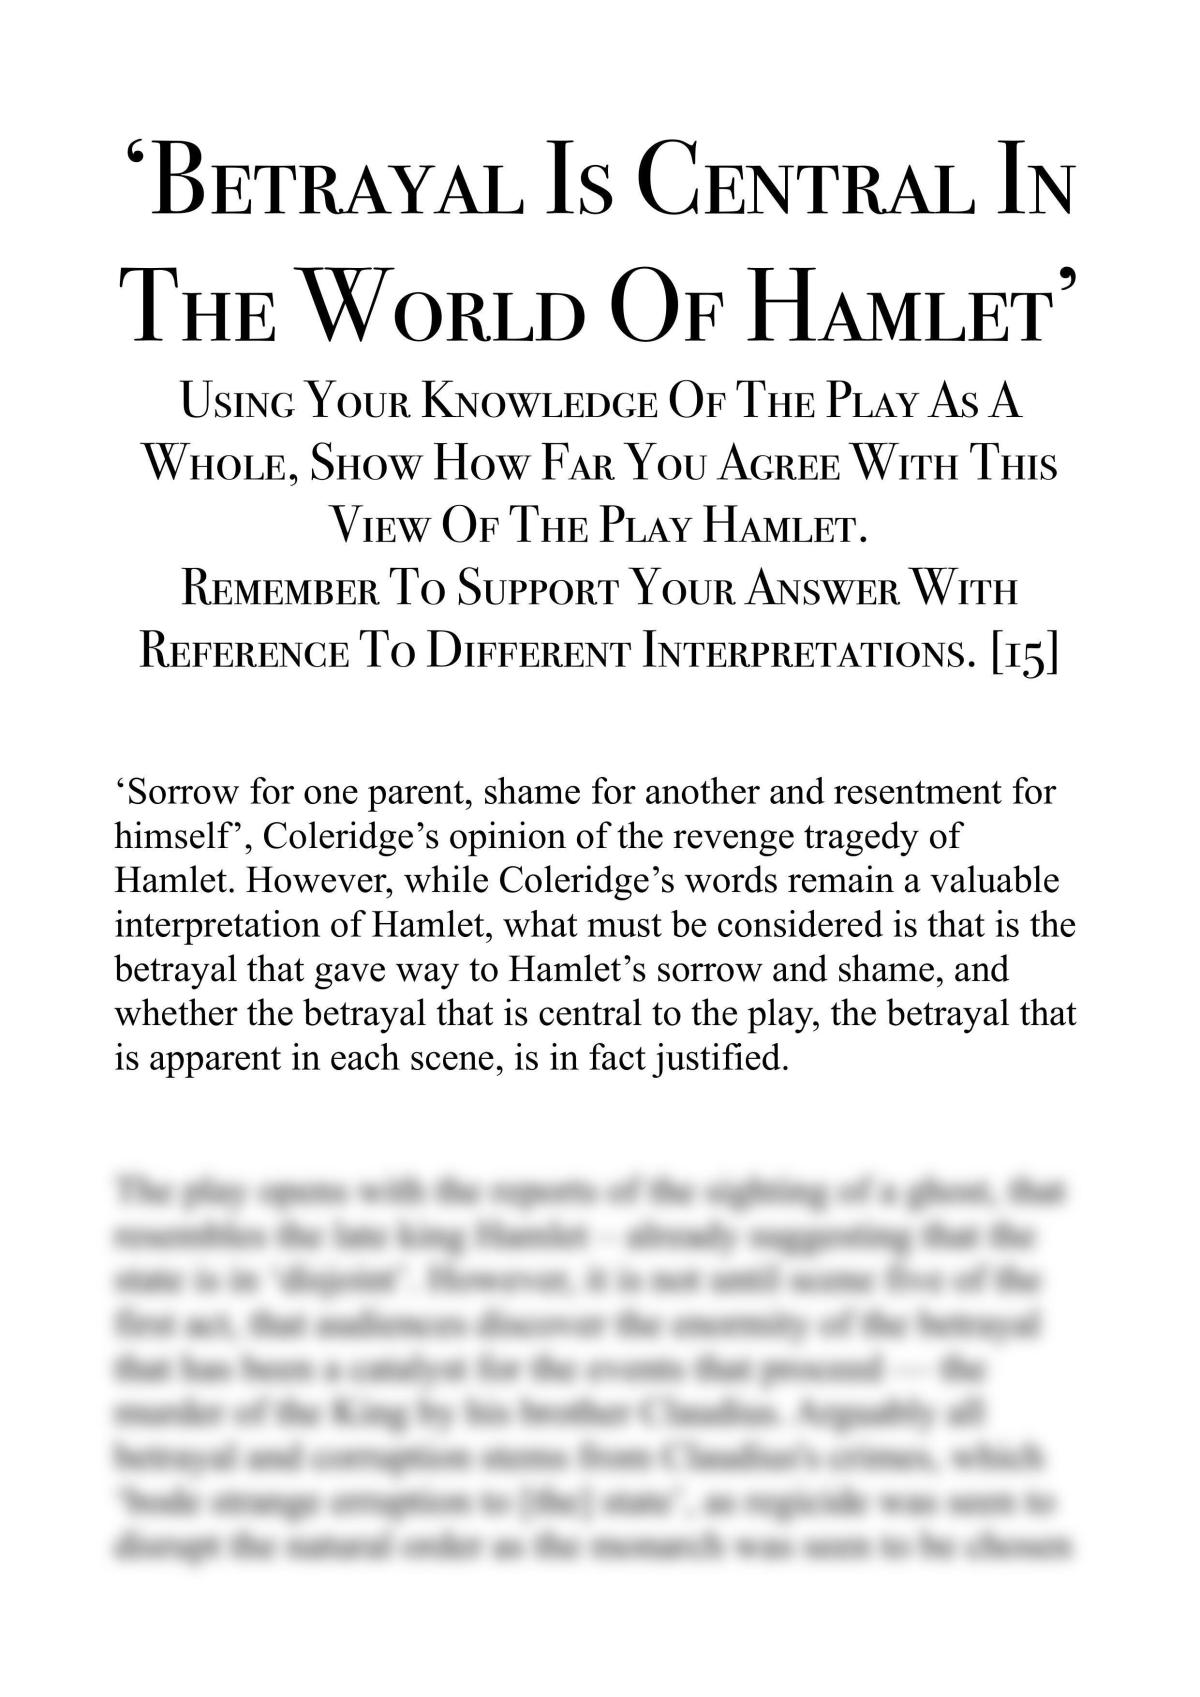 hamlet essay on betrayal